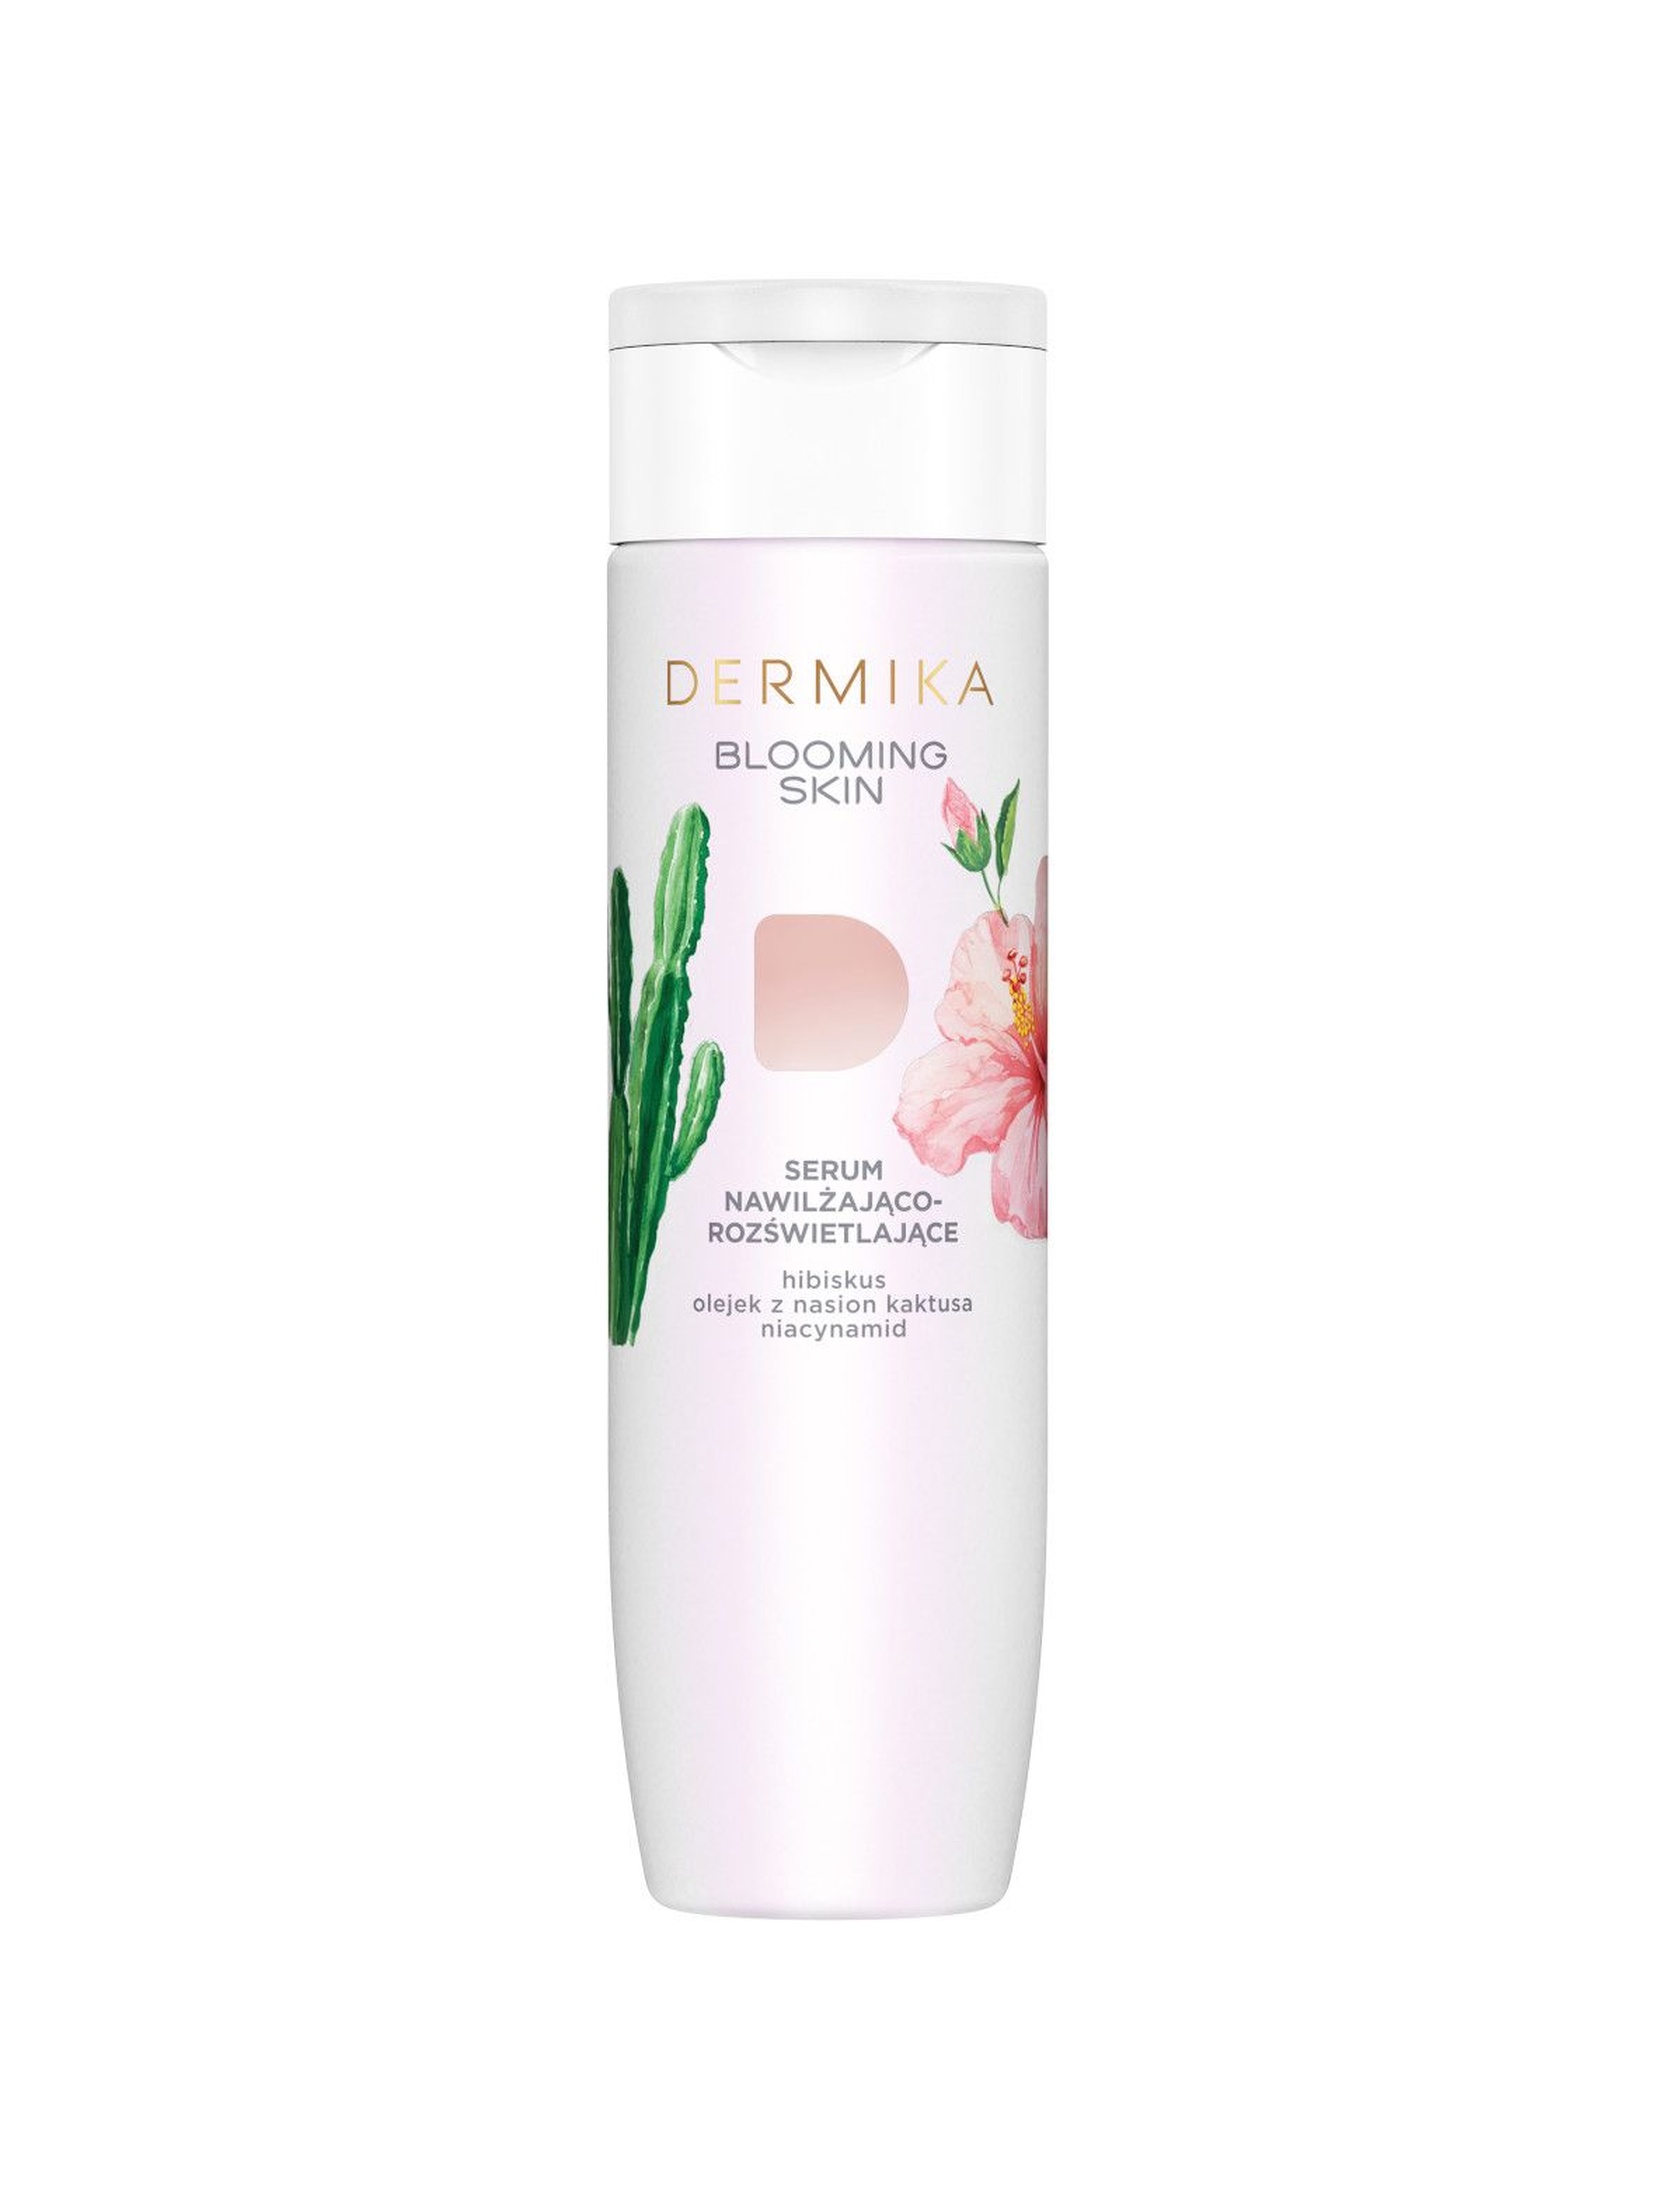 Dermika Blooming Skin serum - 200 ml